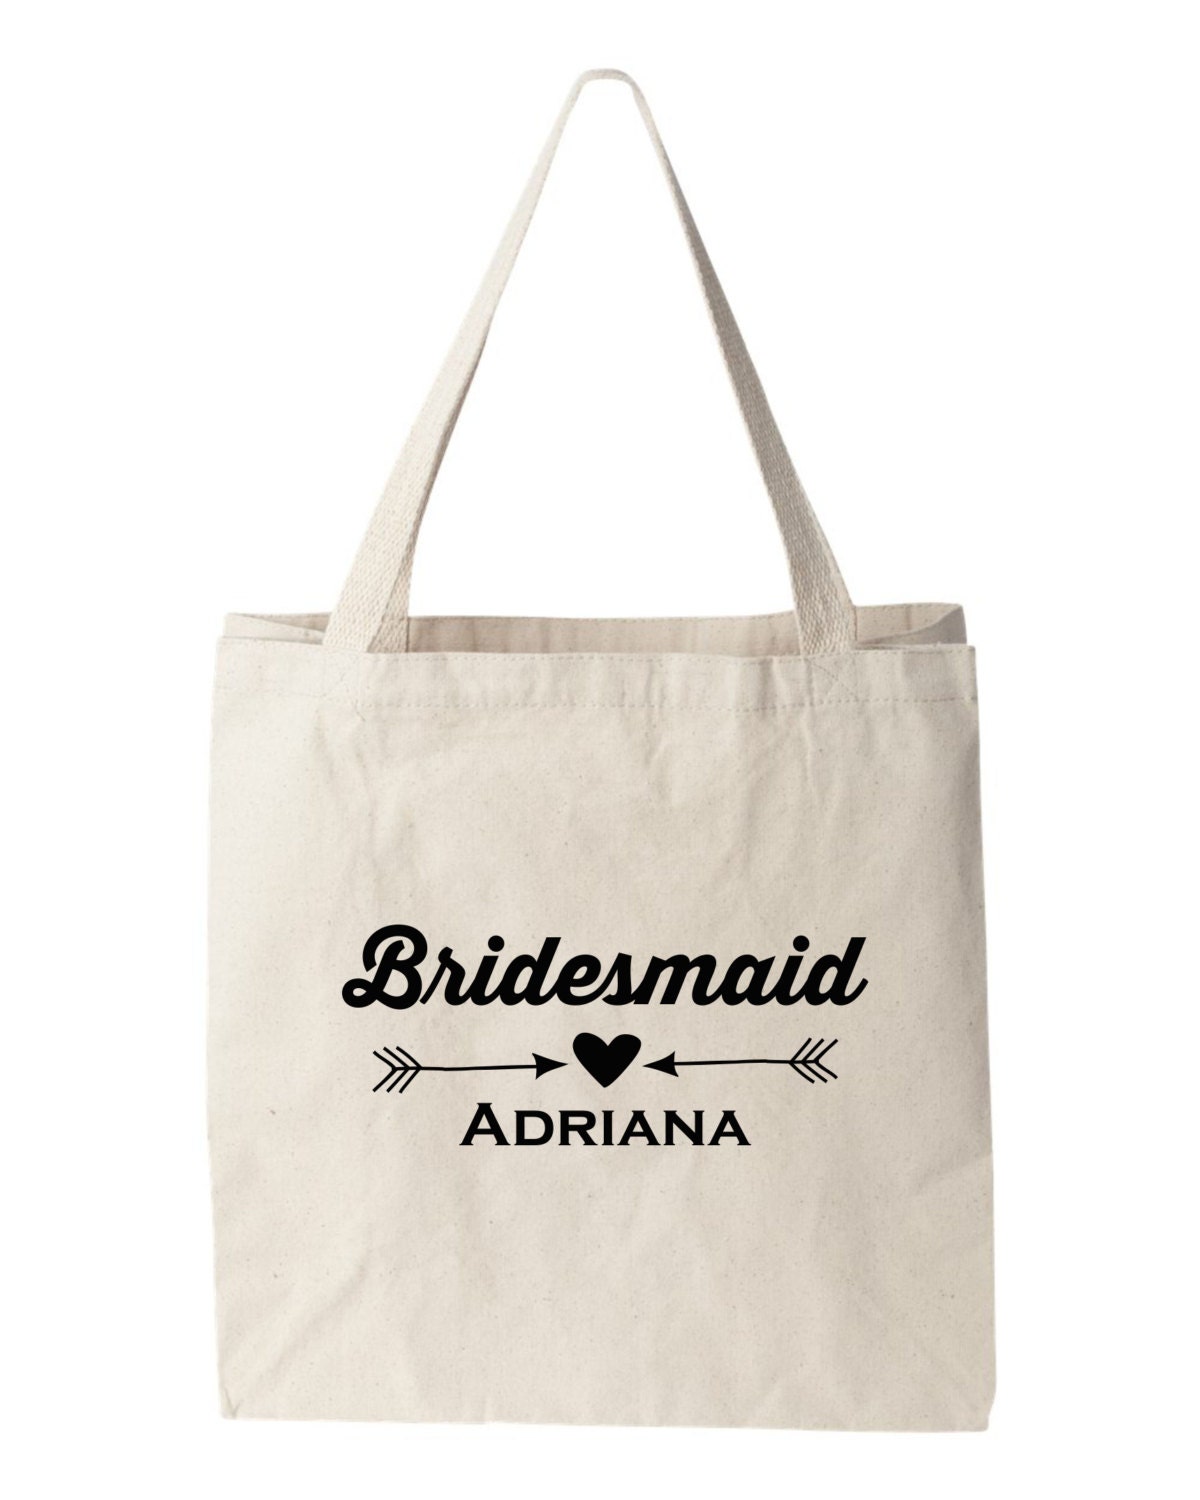 Personalized Bridesmaid tote bag Bridesmaids by tinygreenapples